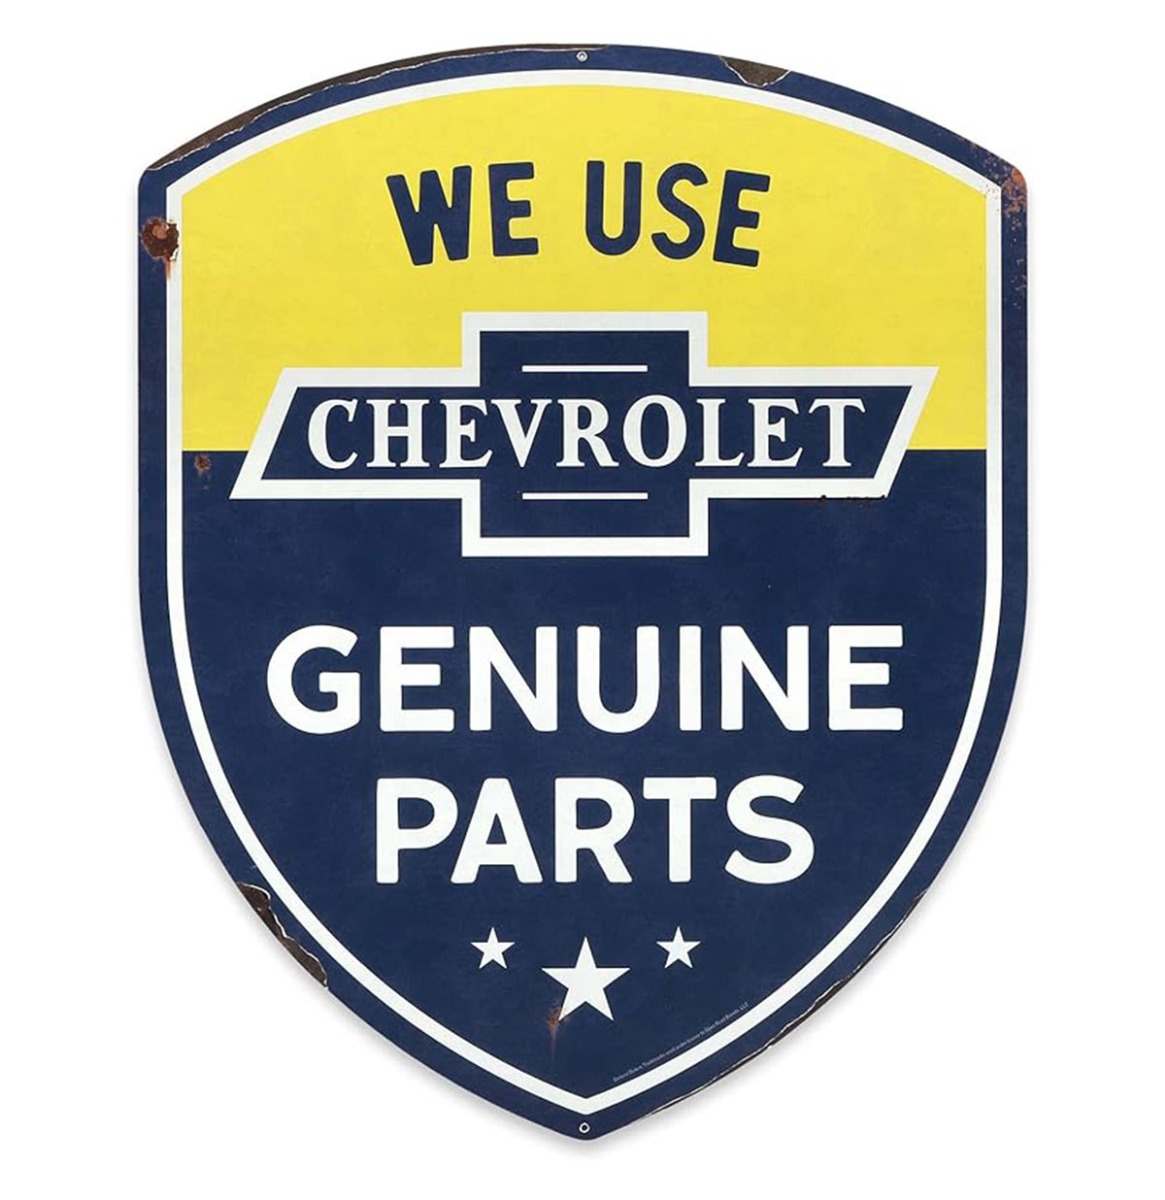 Fiftiesstore Chevrolet Genuine Parts Metalen Bord - 57 x 58cm